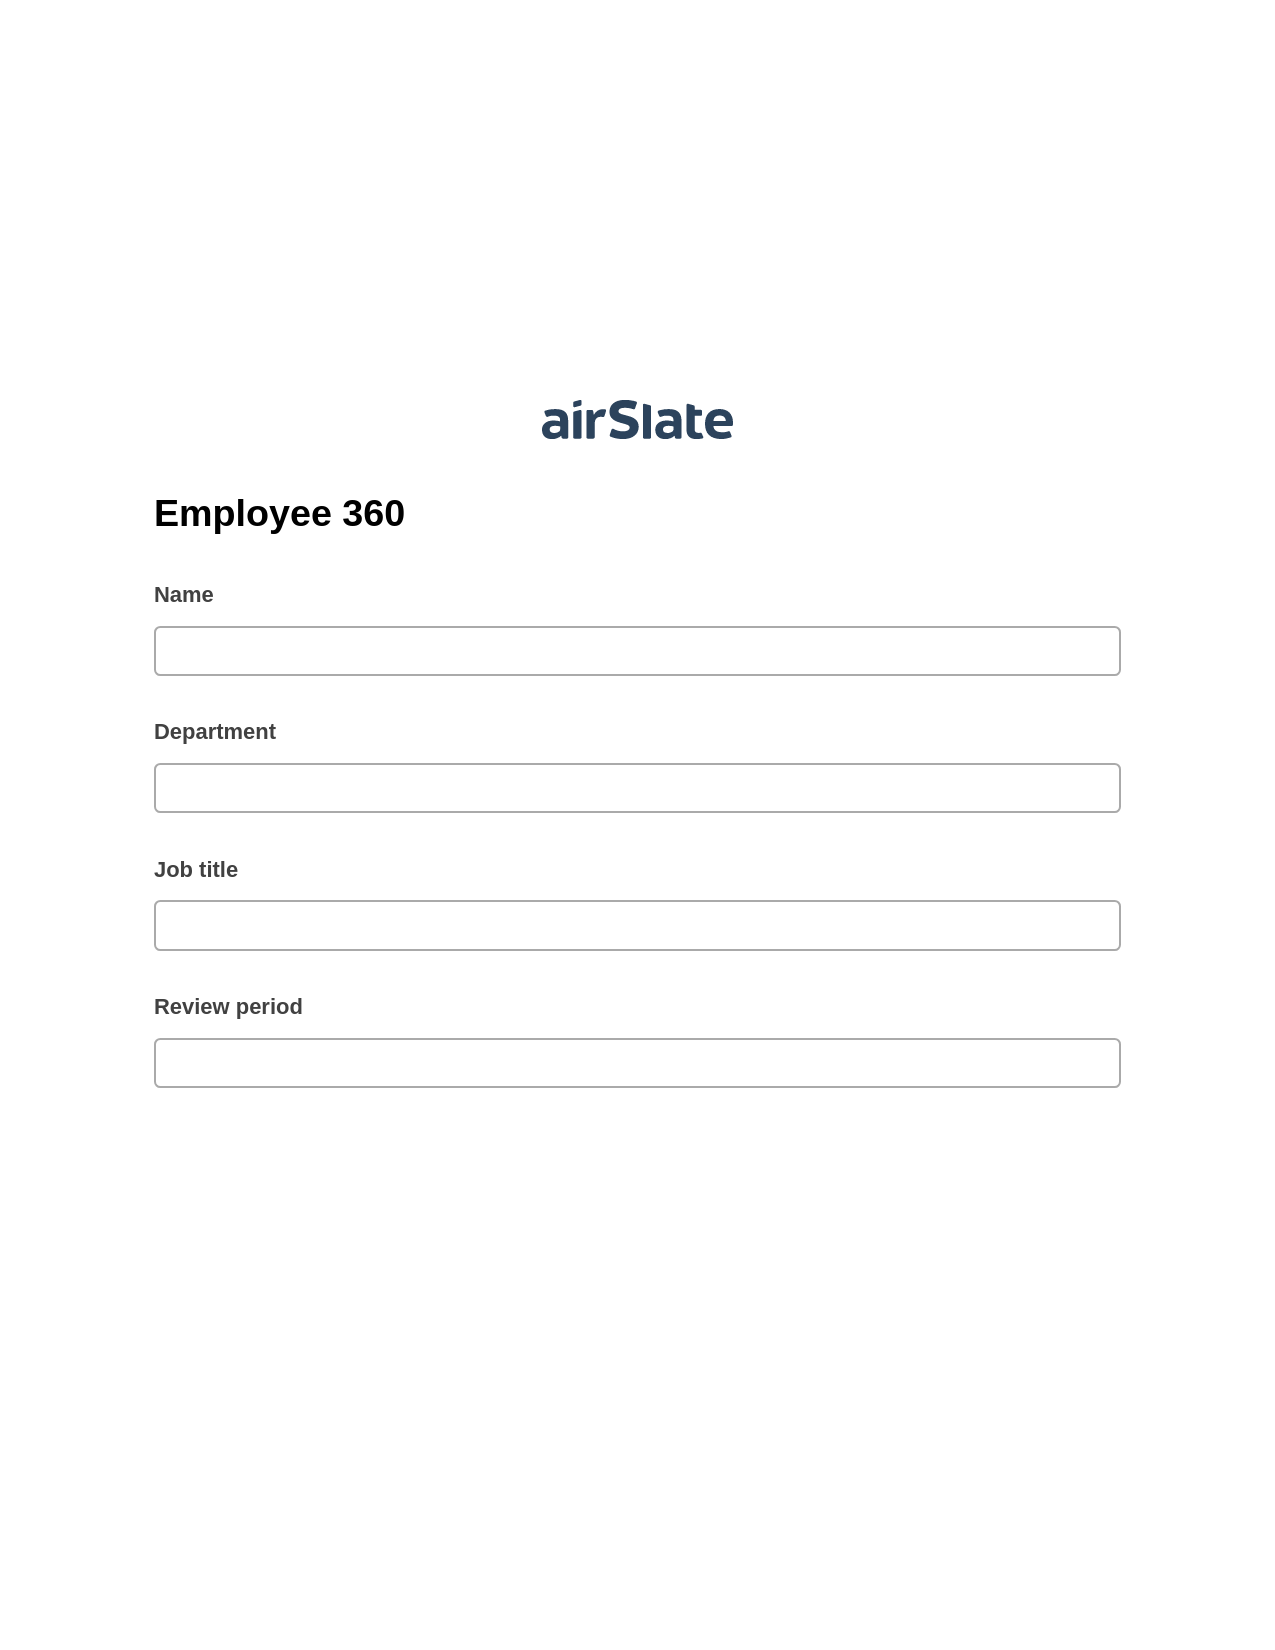 Employee 360 Pre-fill from CSV File Bot, Google Calendar Bot, Slack Two-Way Binding Bot